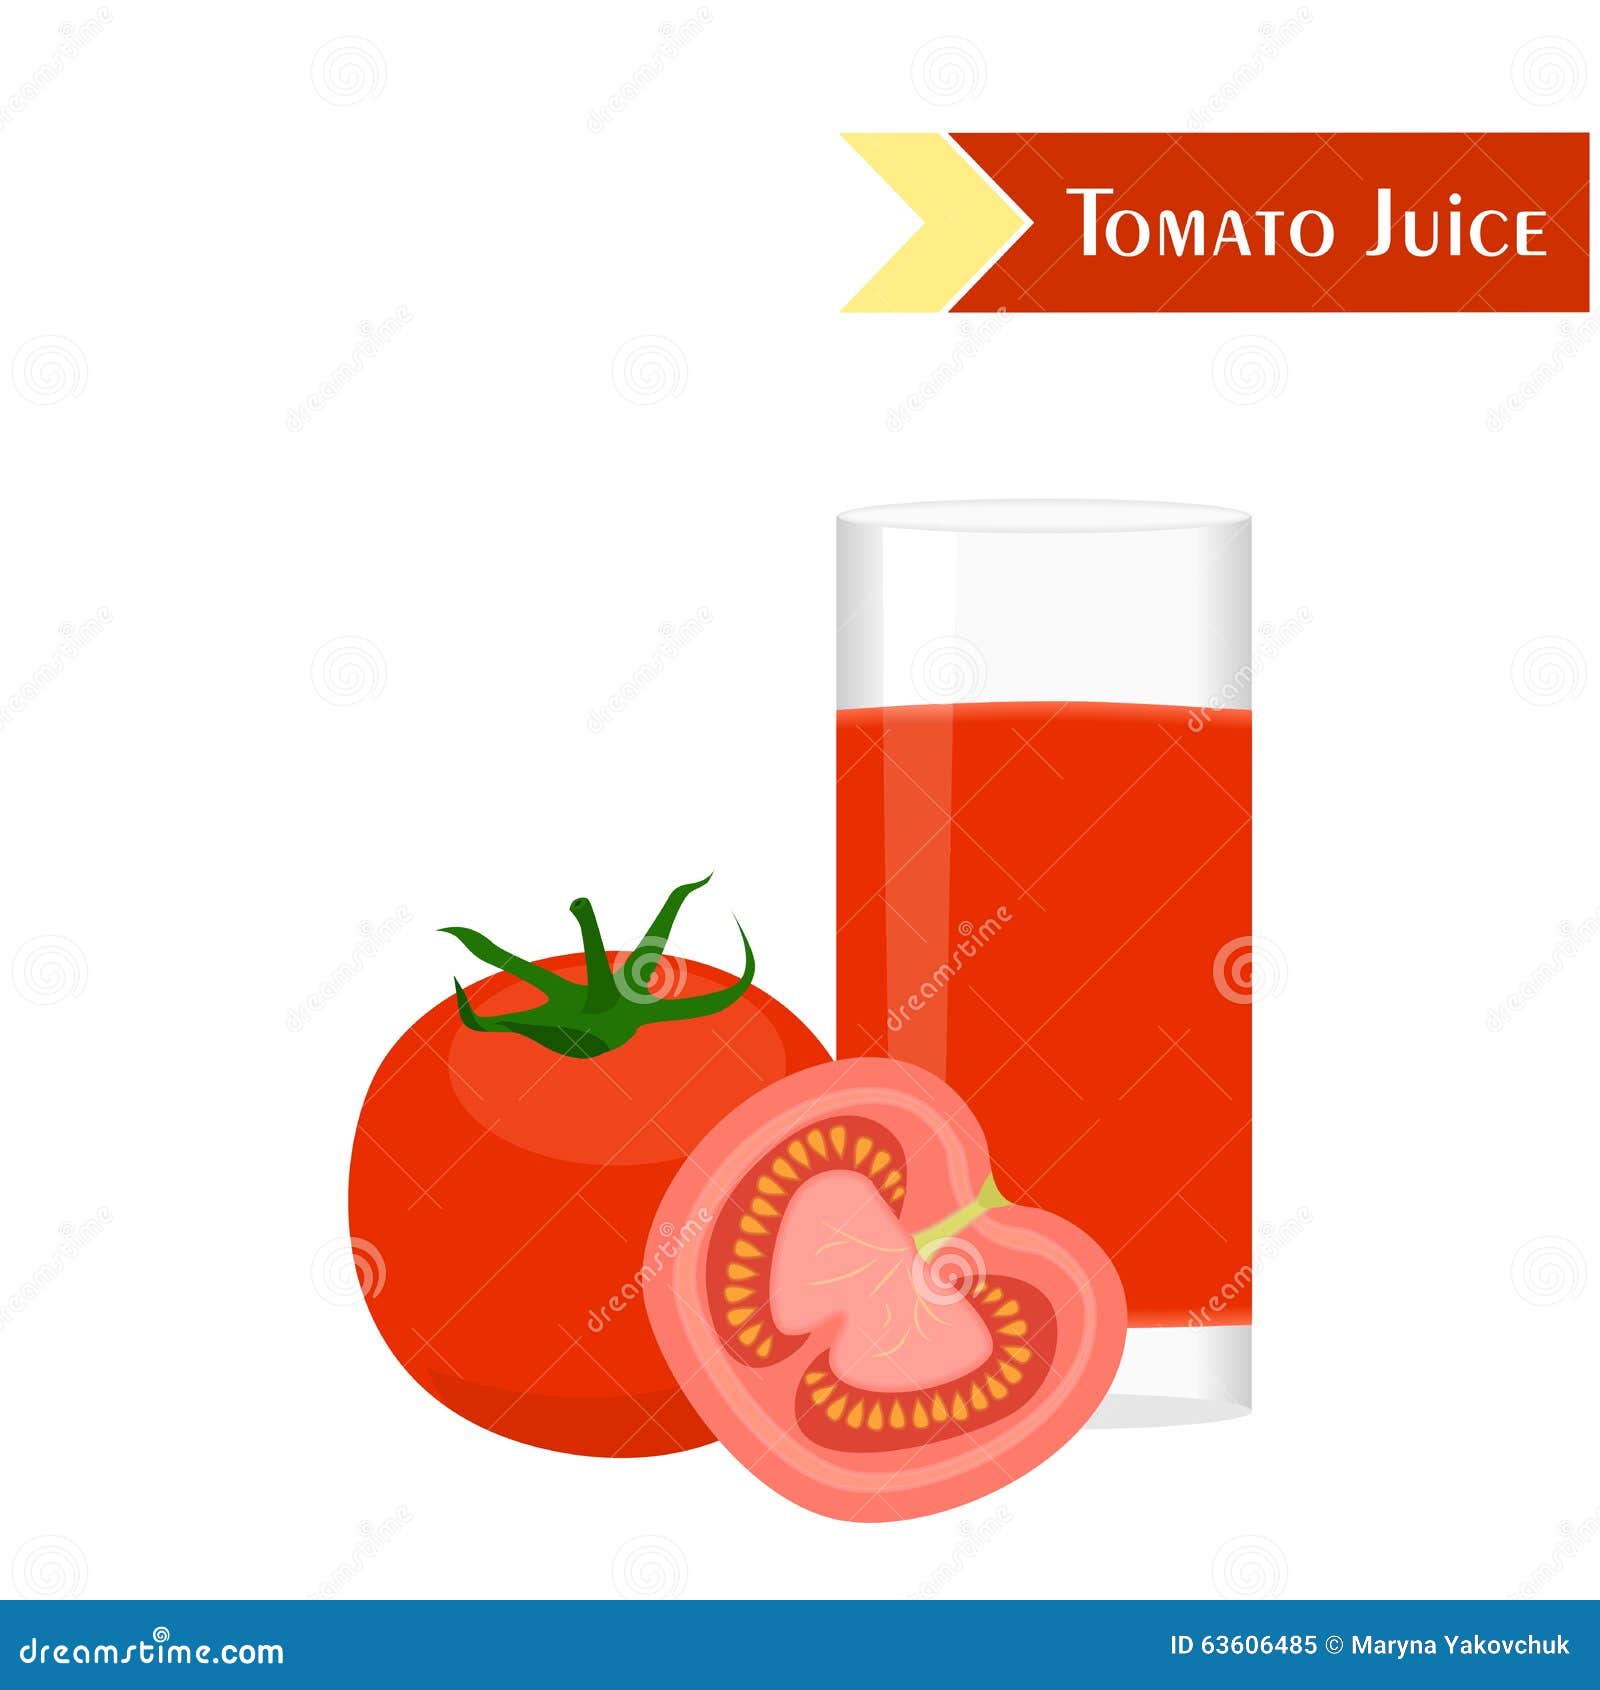 tomato juice clipart - photo #30